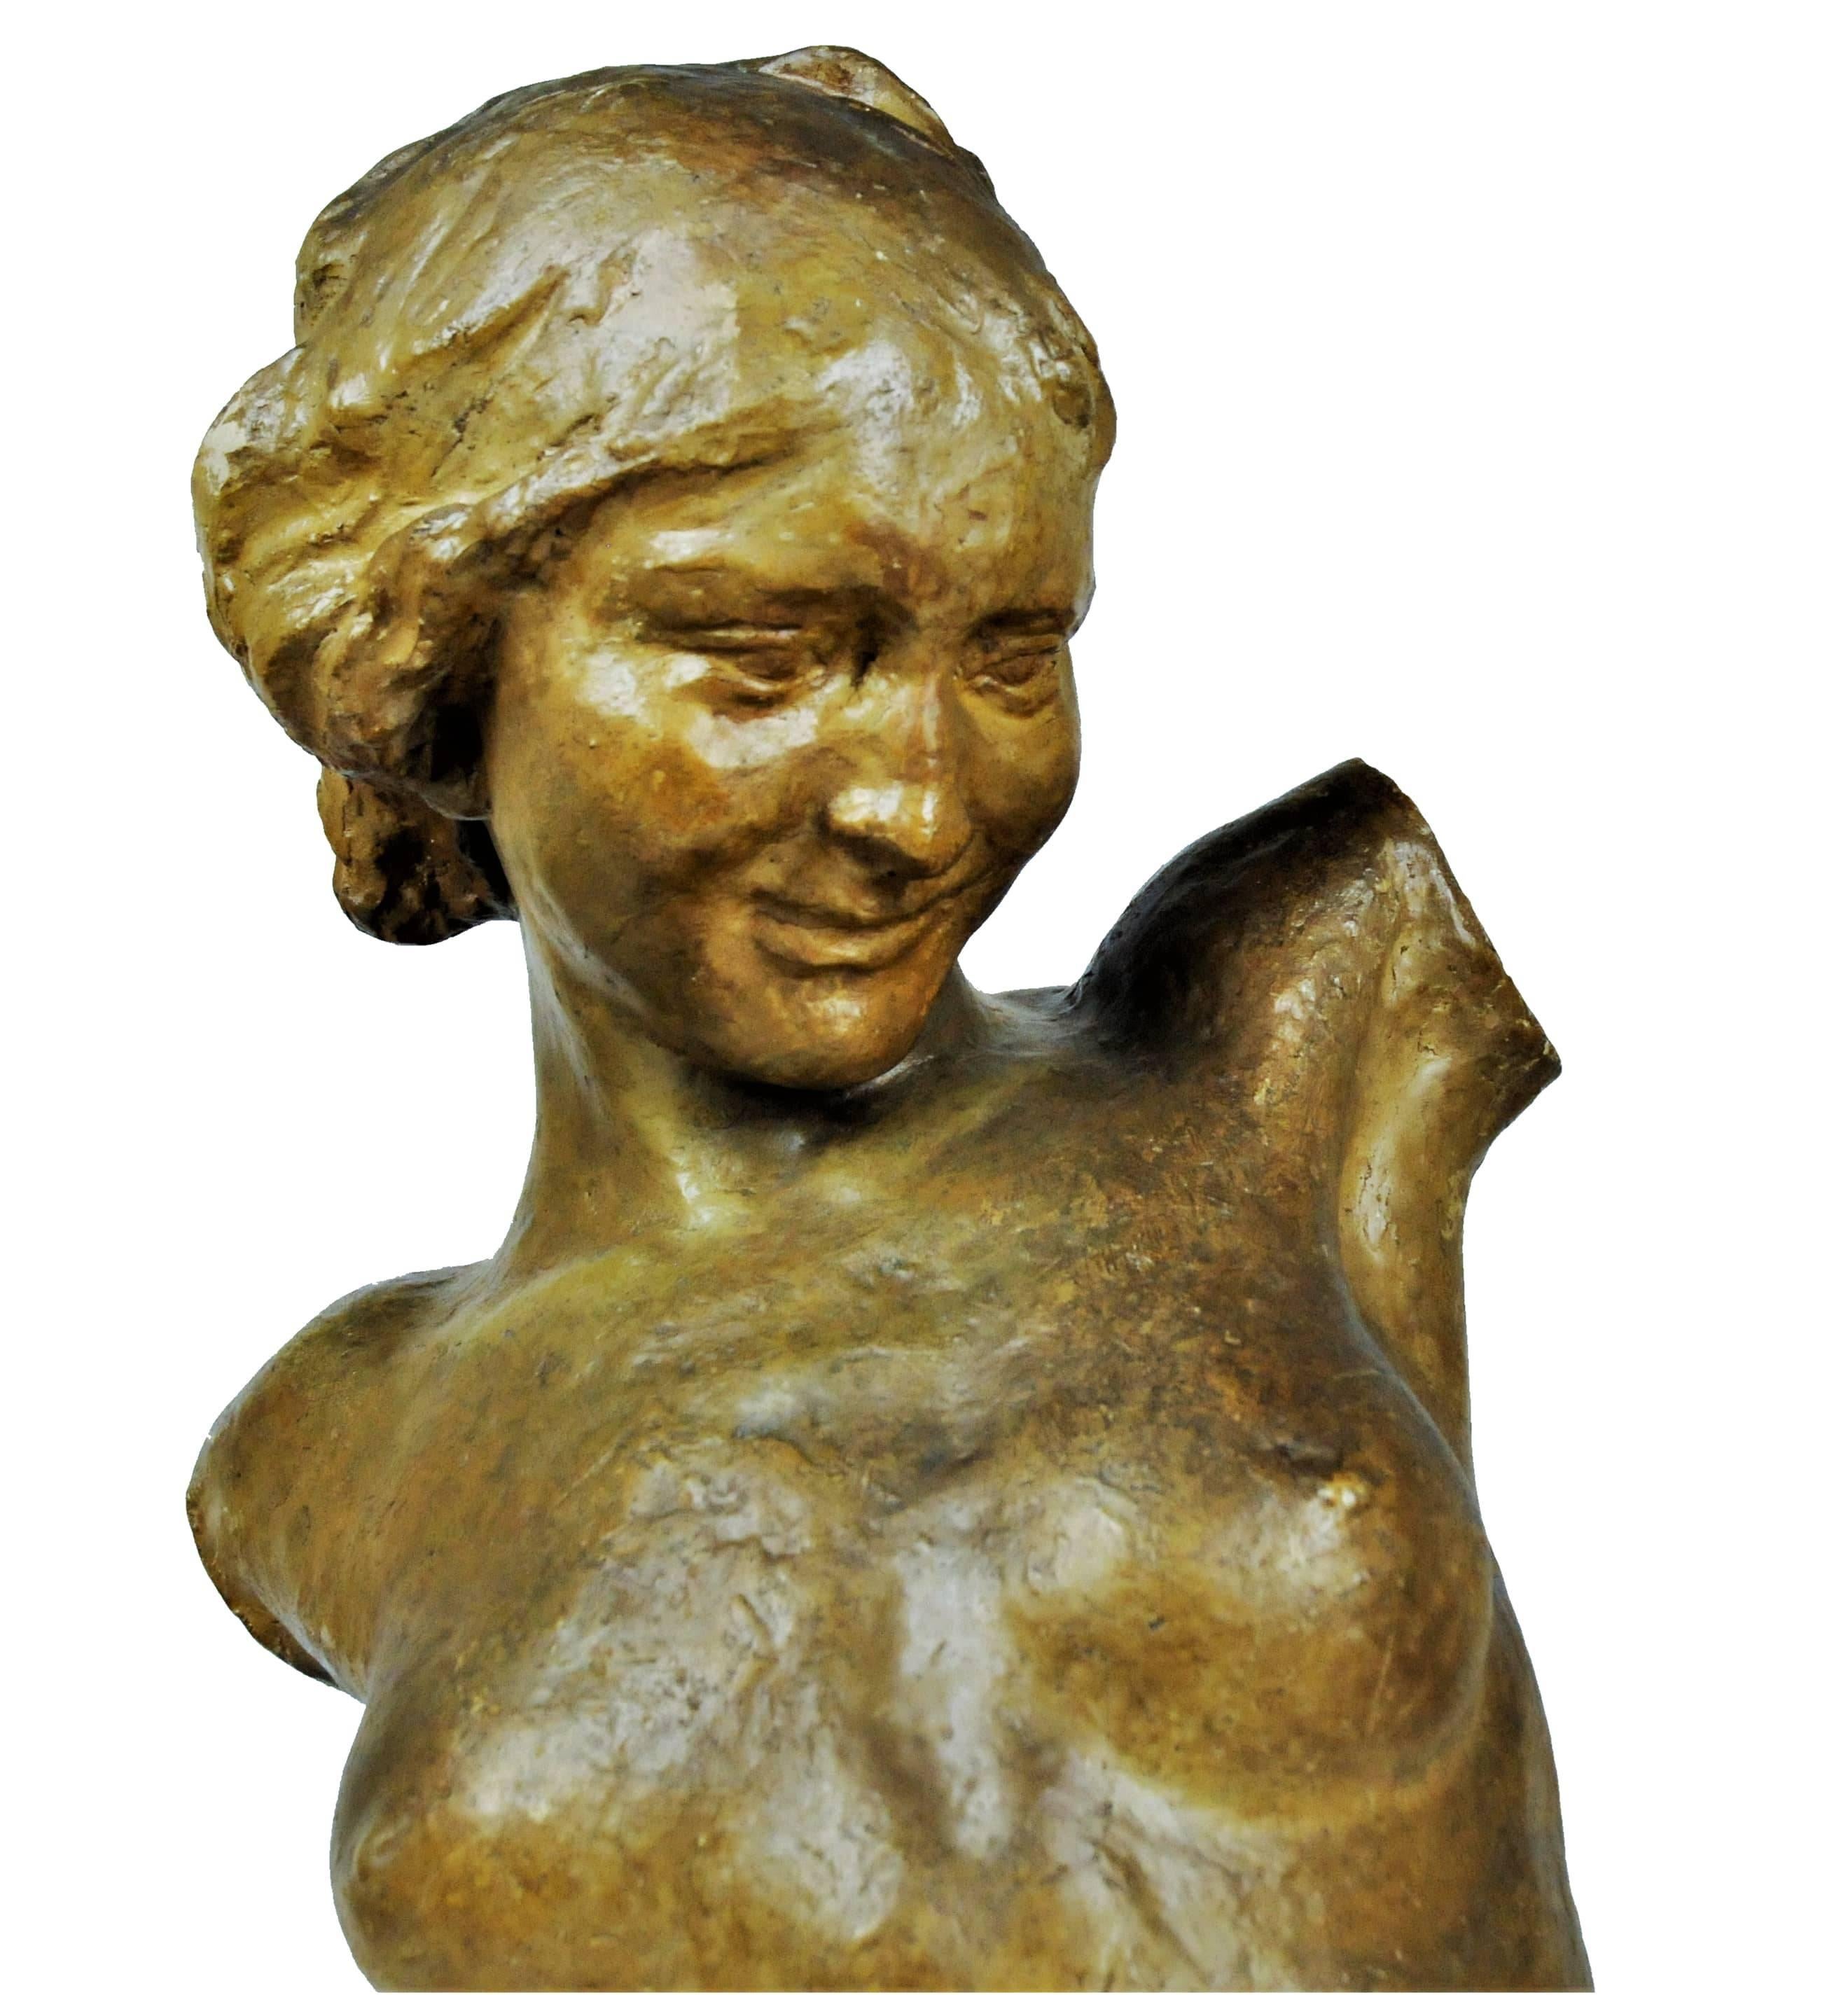 Flemish Art Nouveau, female torso, terracotta sculpture, 1900s
The sculpture is inscribed in the back.